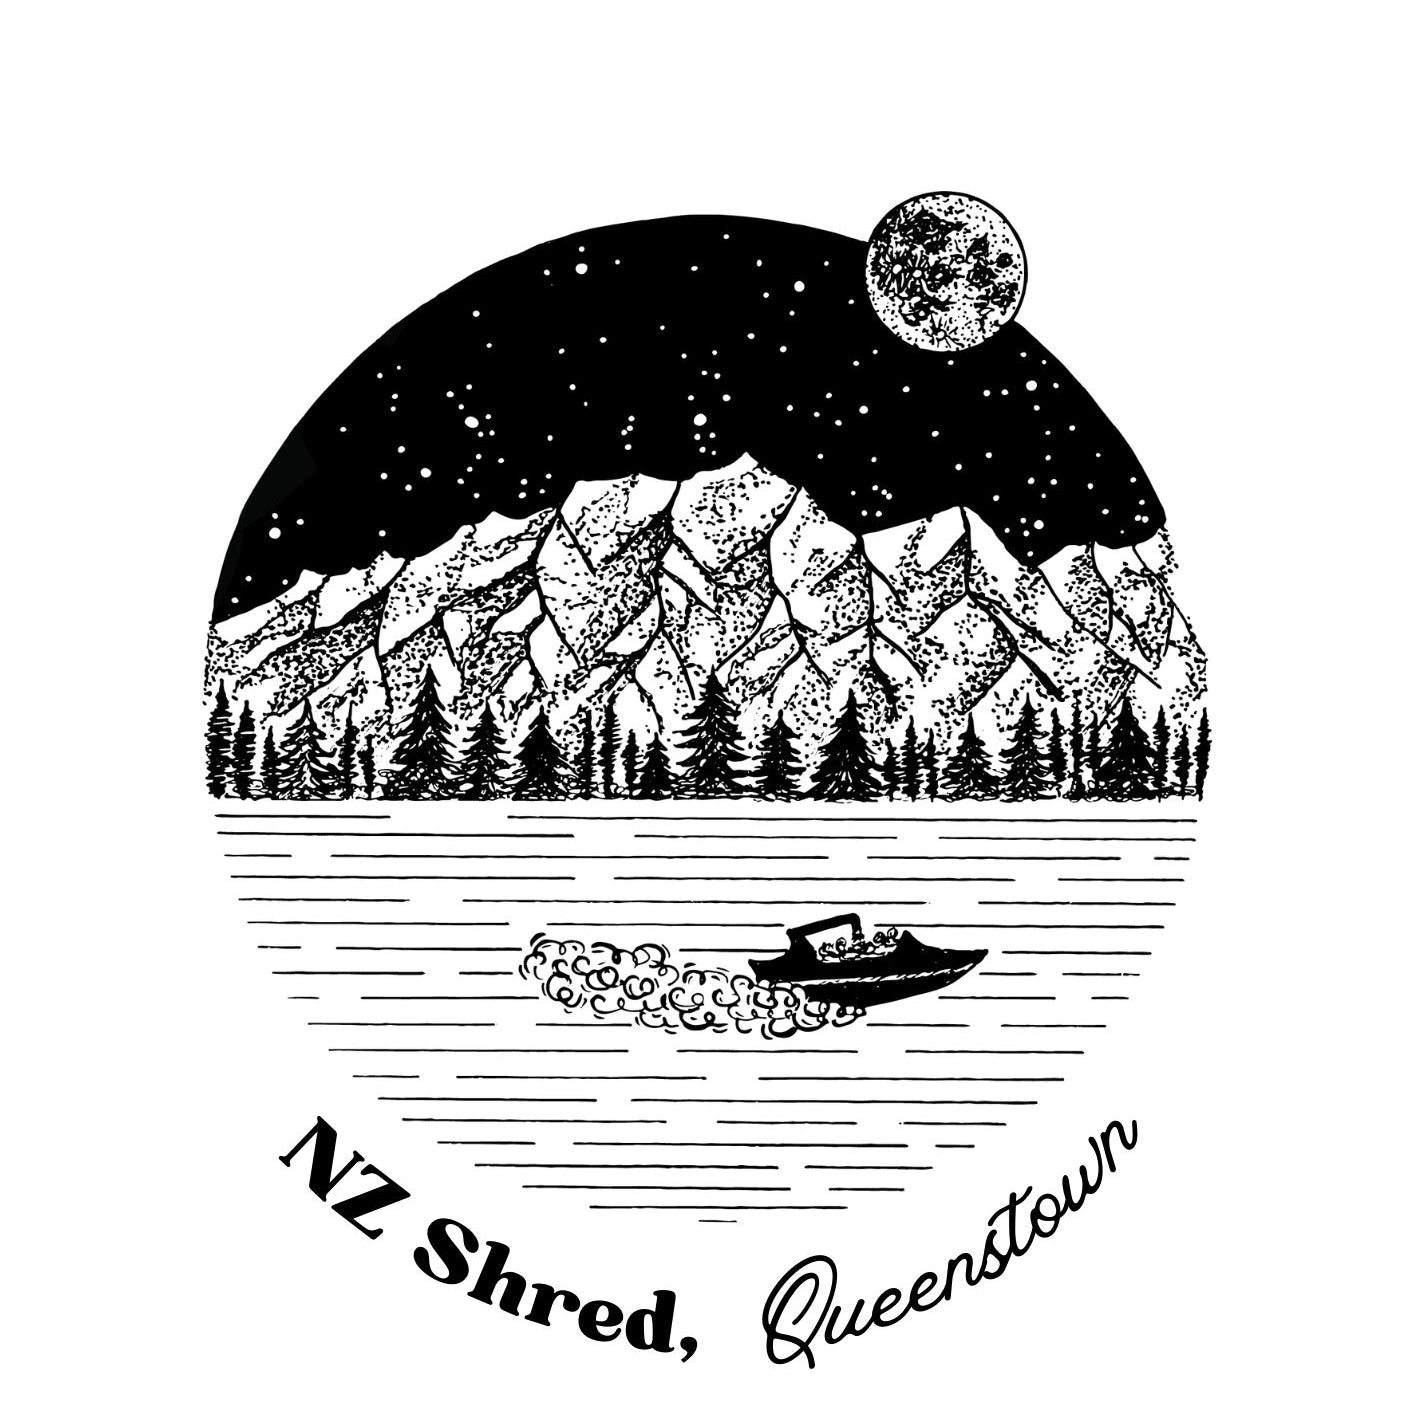 NZ Shred Queenstown Art Stickers